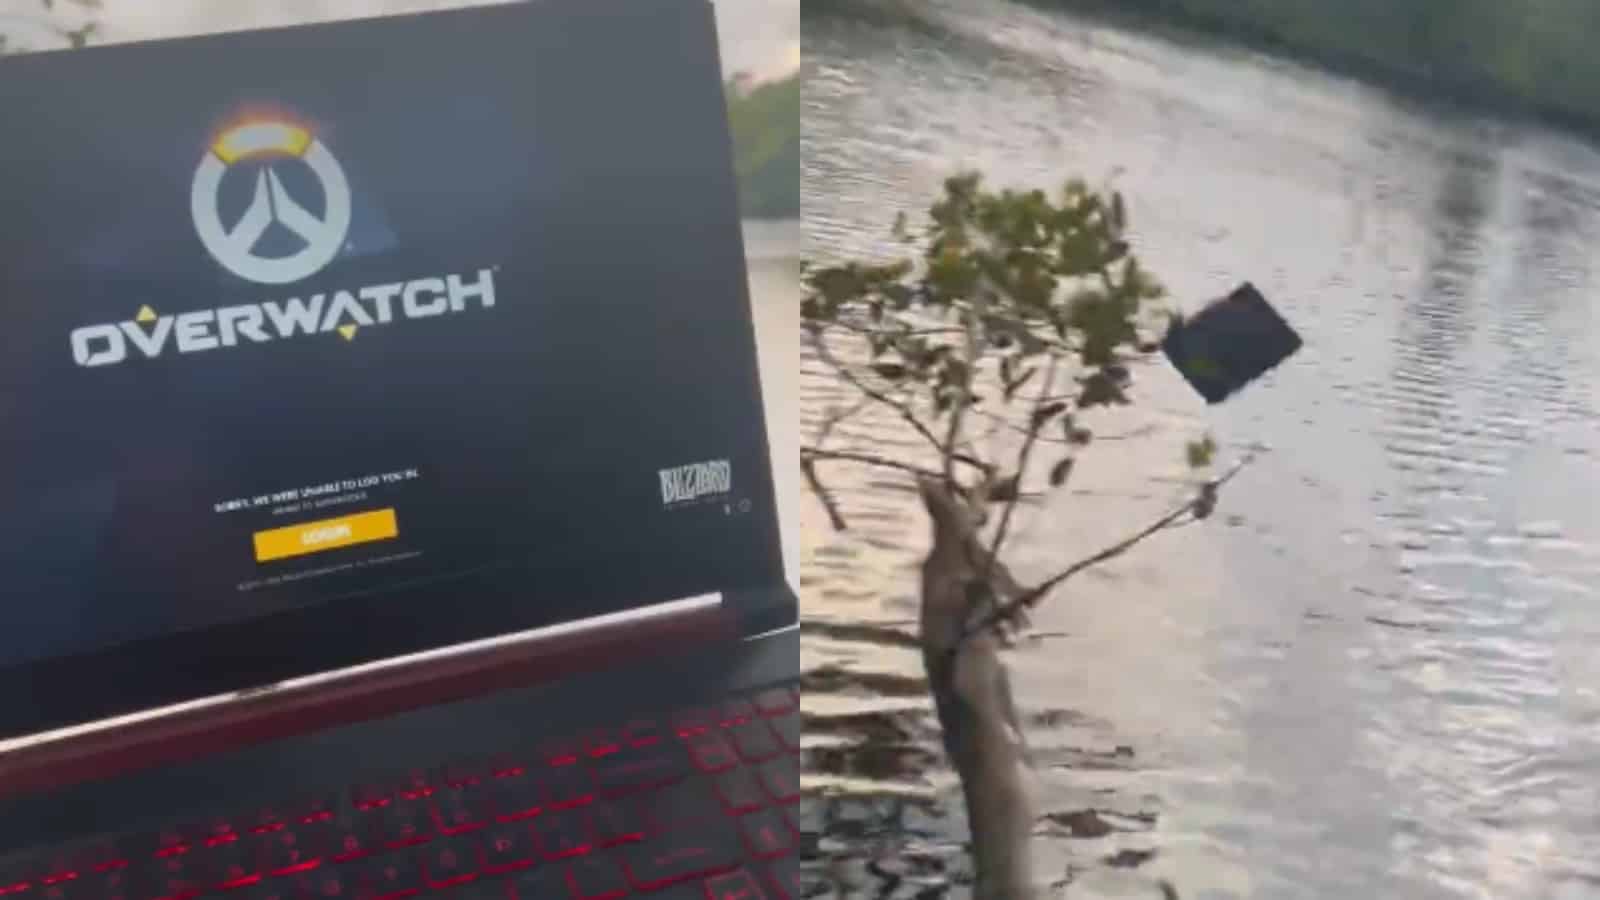 Fl4k_Drifter throws overwatch laptop in lake